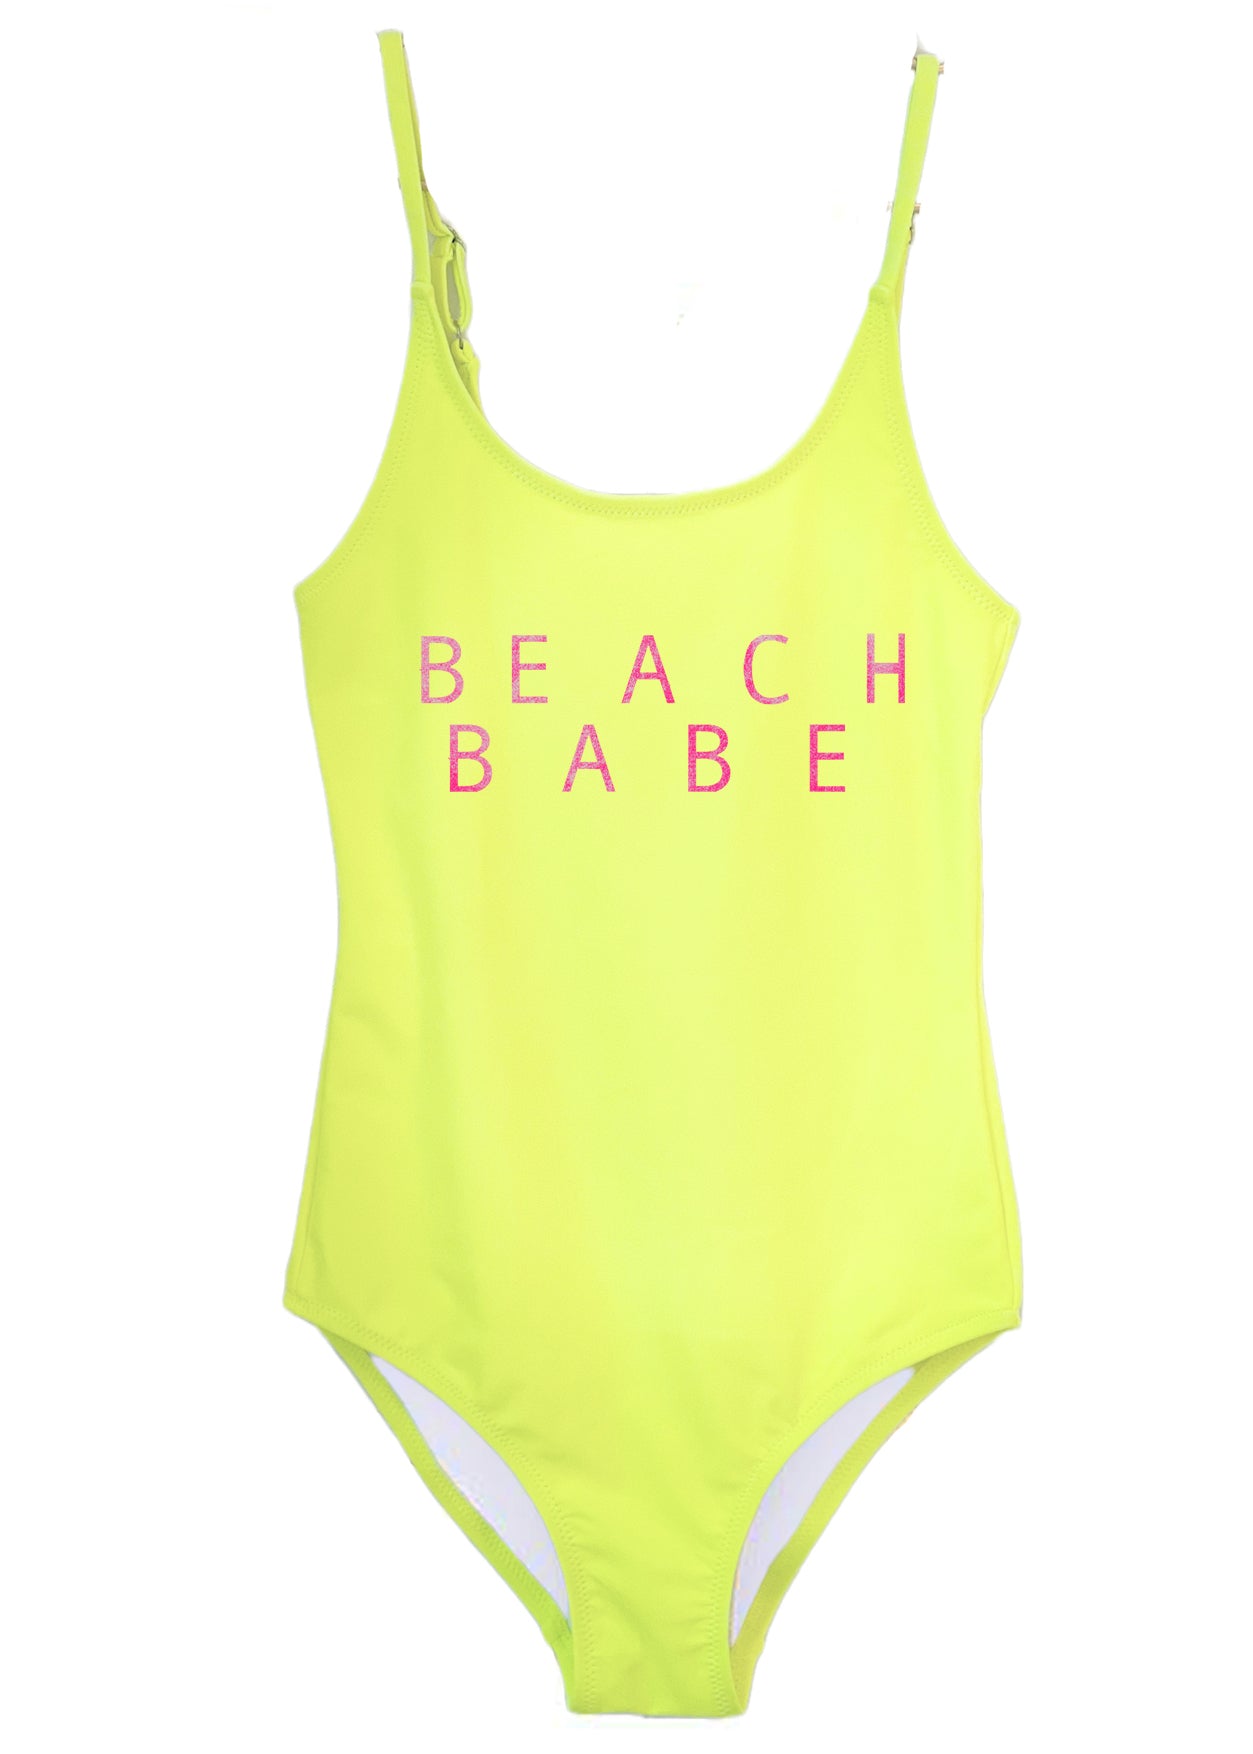 beachwear for girls, neon yellow cute bathing suits for girls